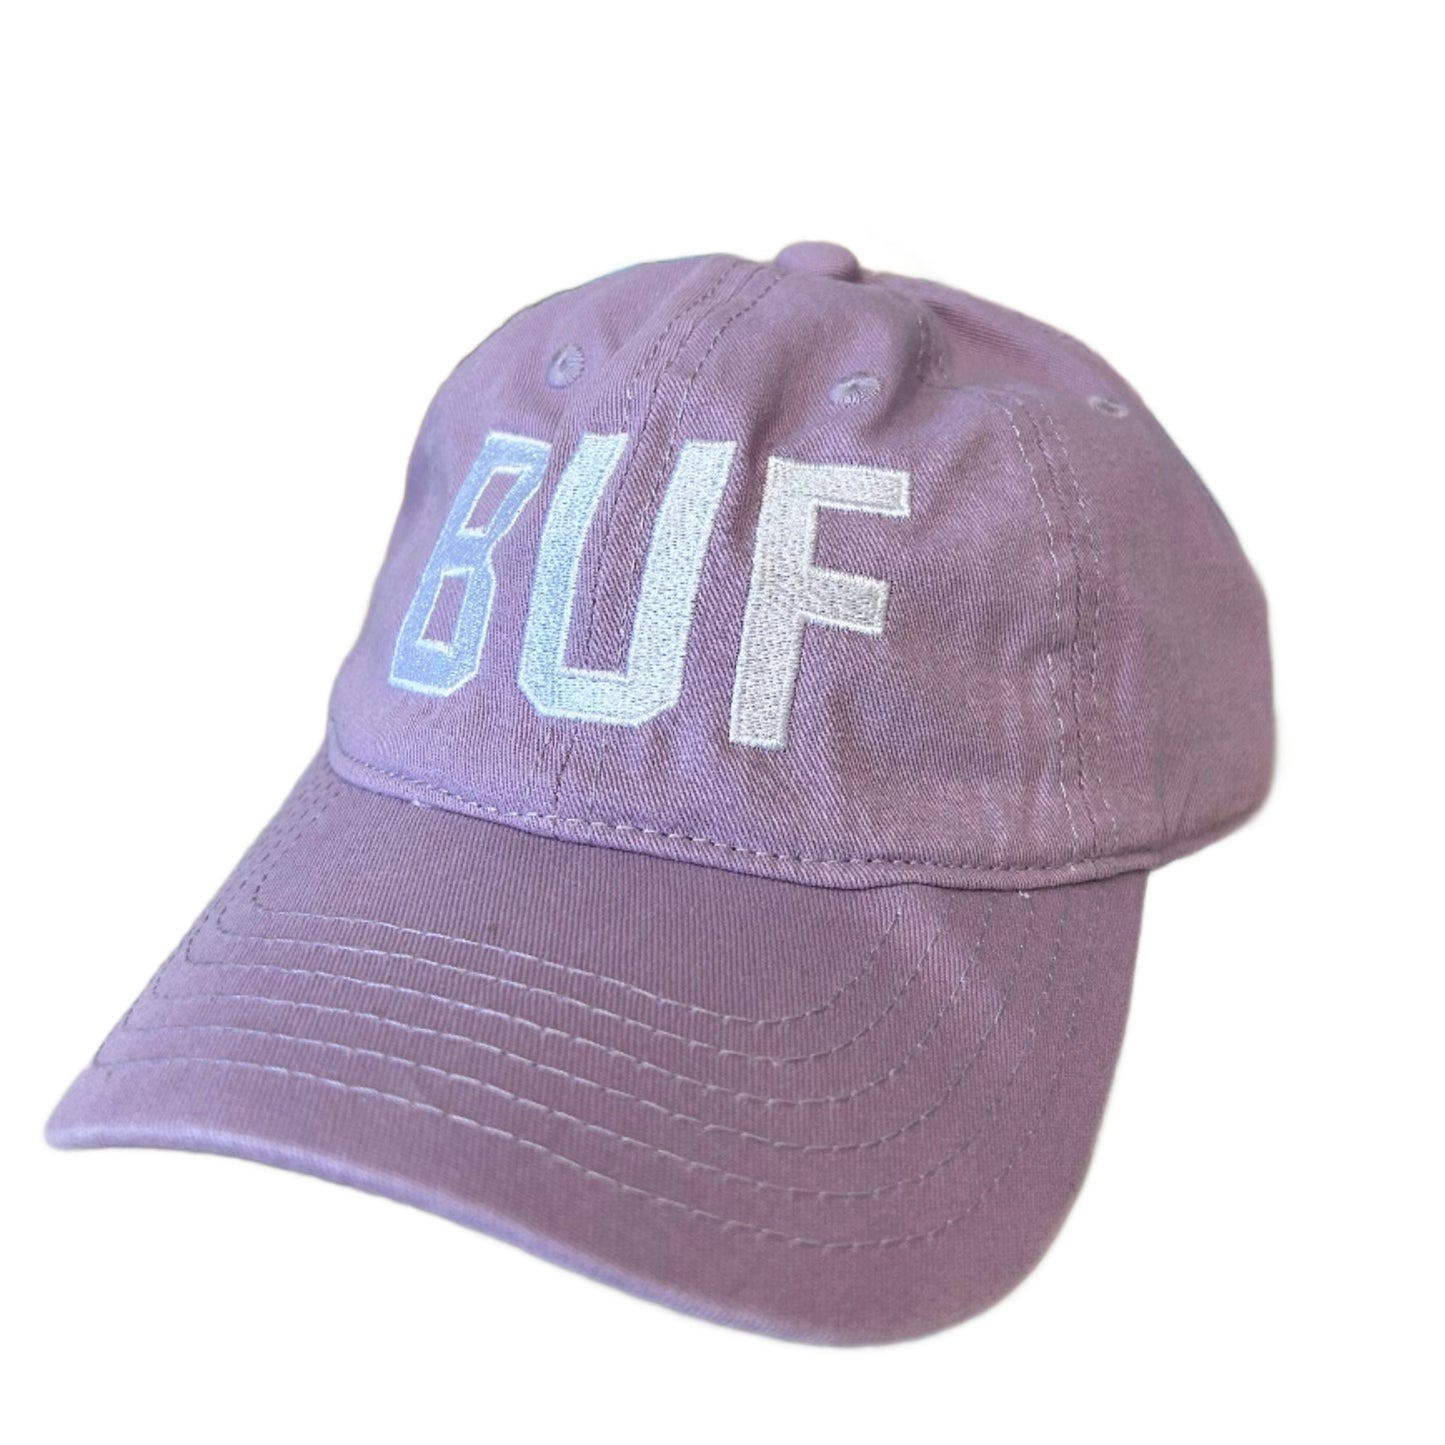 BUF Baseball Cap in Lavender